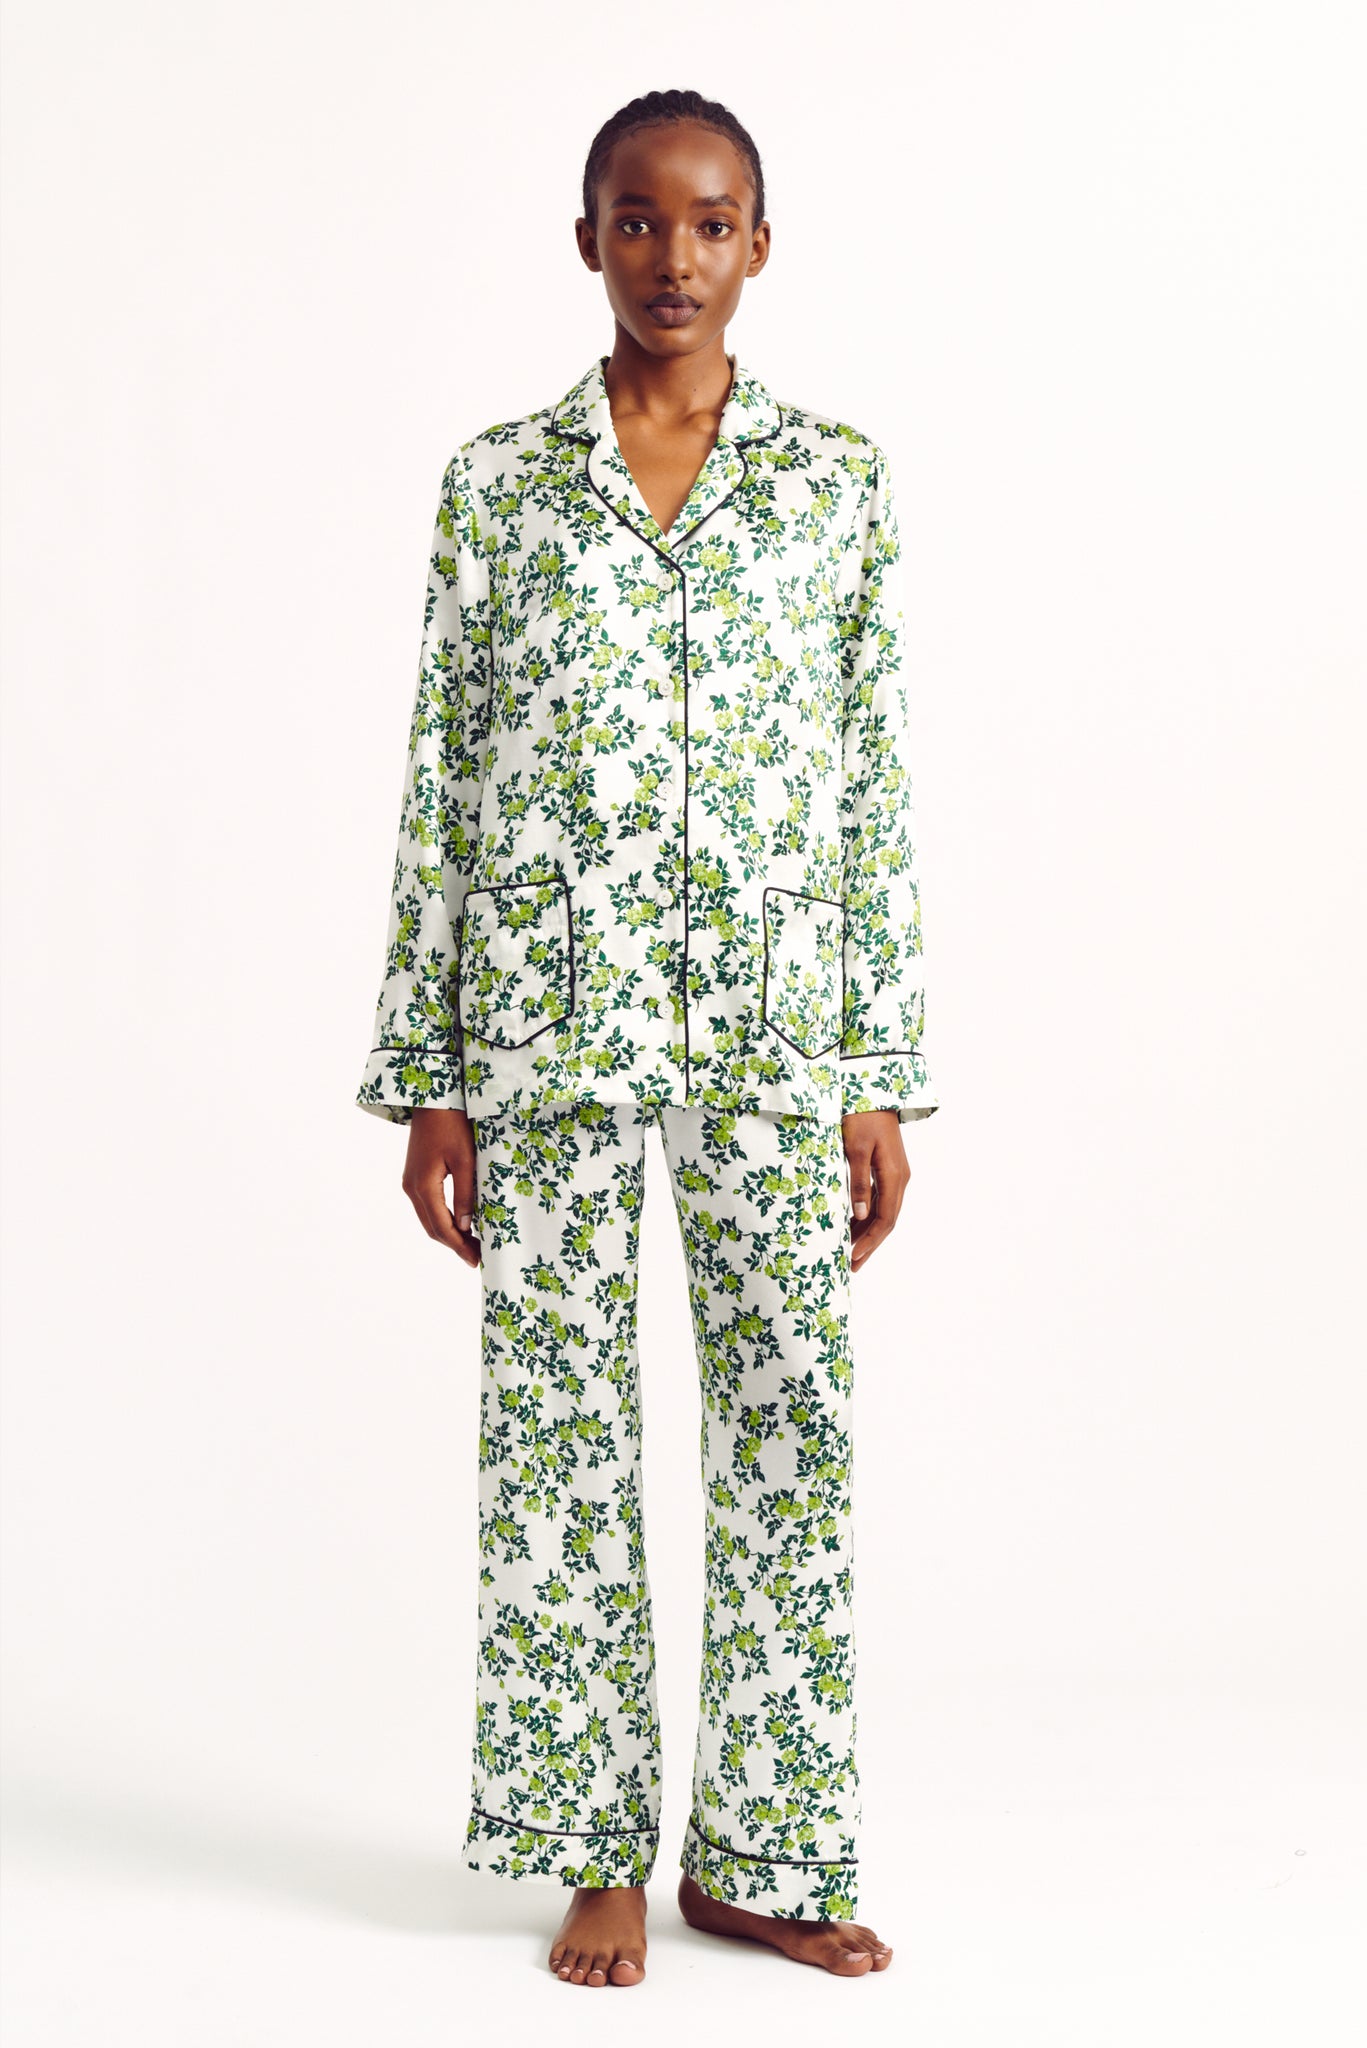 Trina Pyjama Blouse in Chartreuse Roses On Ivory Silk Satin